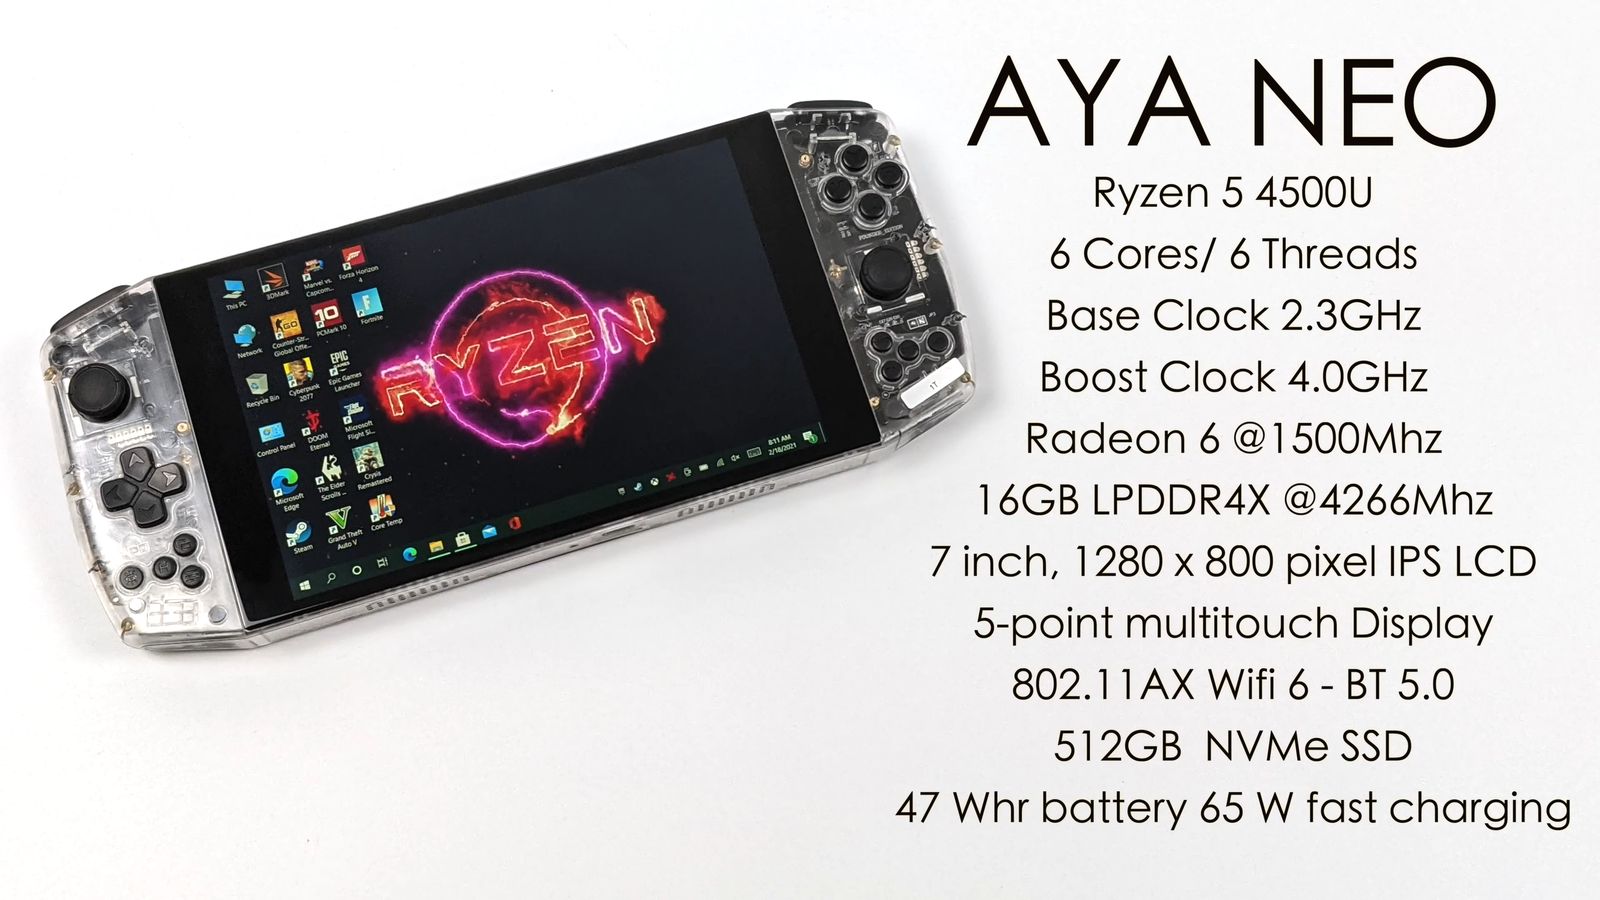 Aya Neo review - AMD Ryzen handheld gaming device